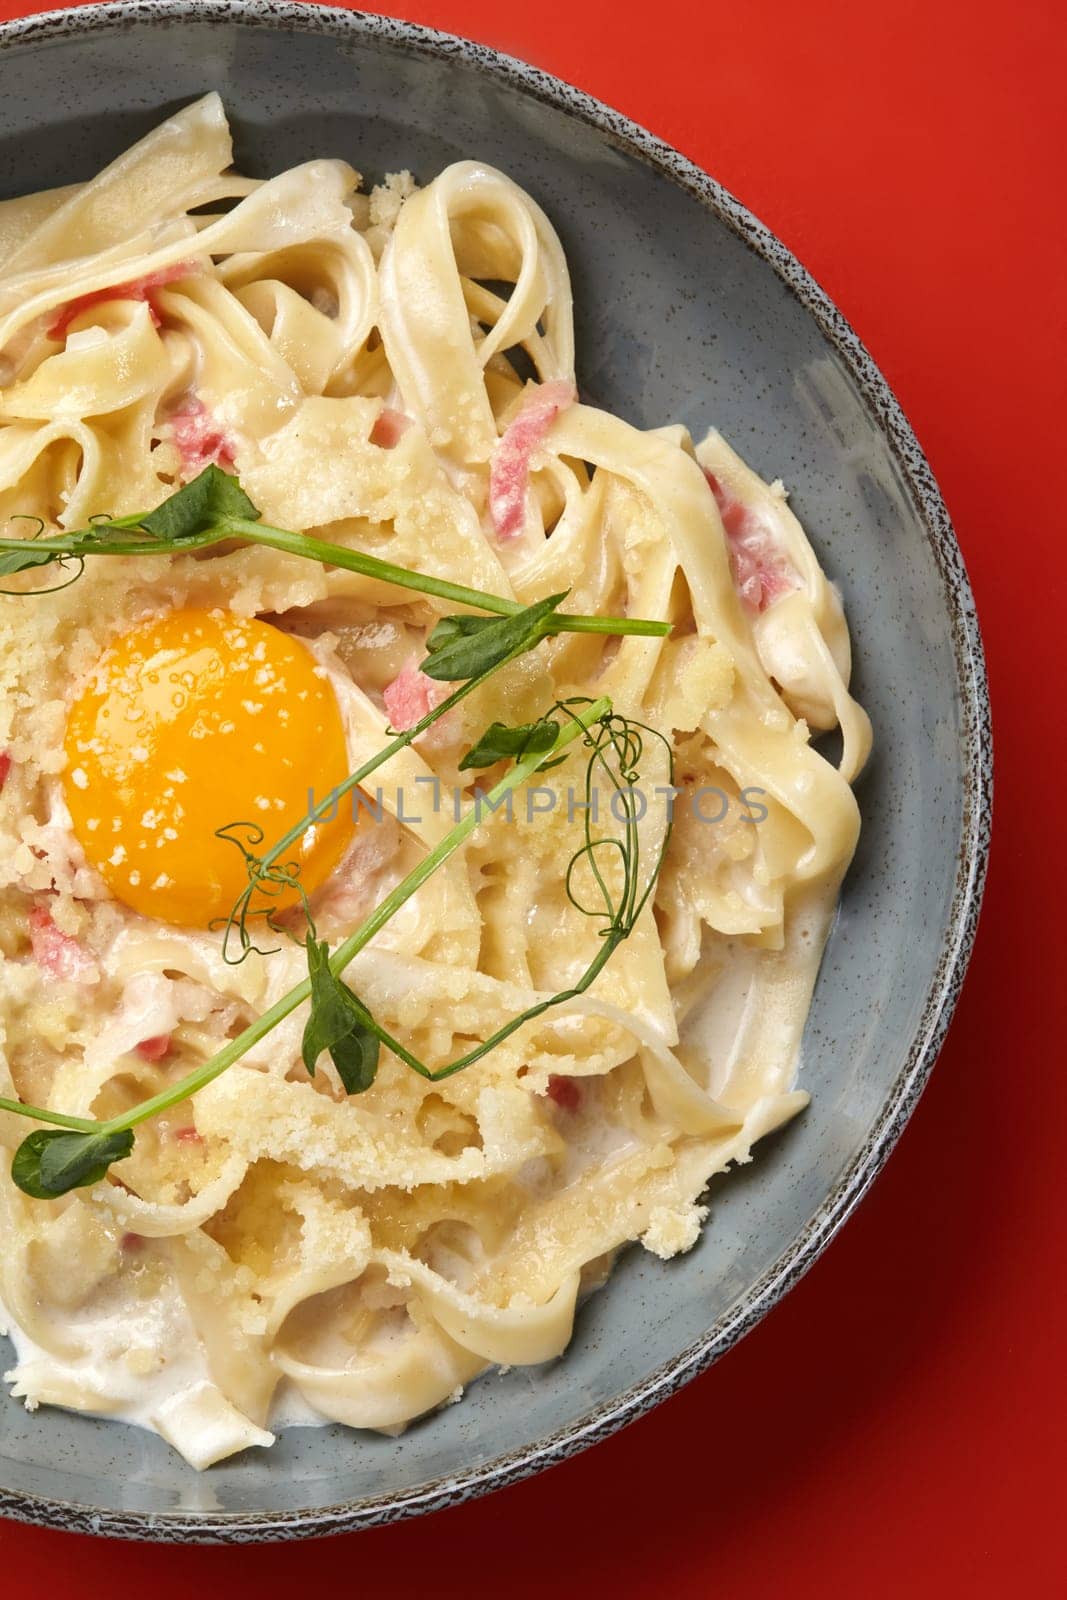 Fettuccine carbonara with pancetta, egg yolk and parmesan on red by nazarovsergey